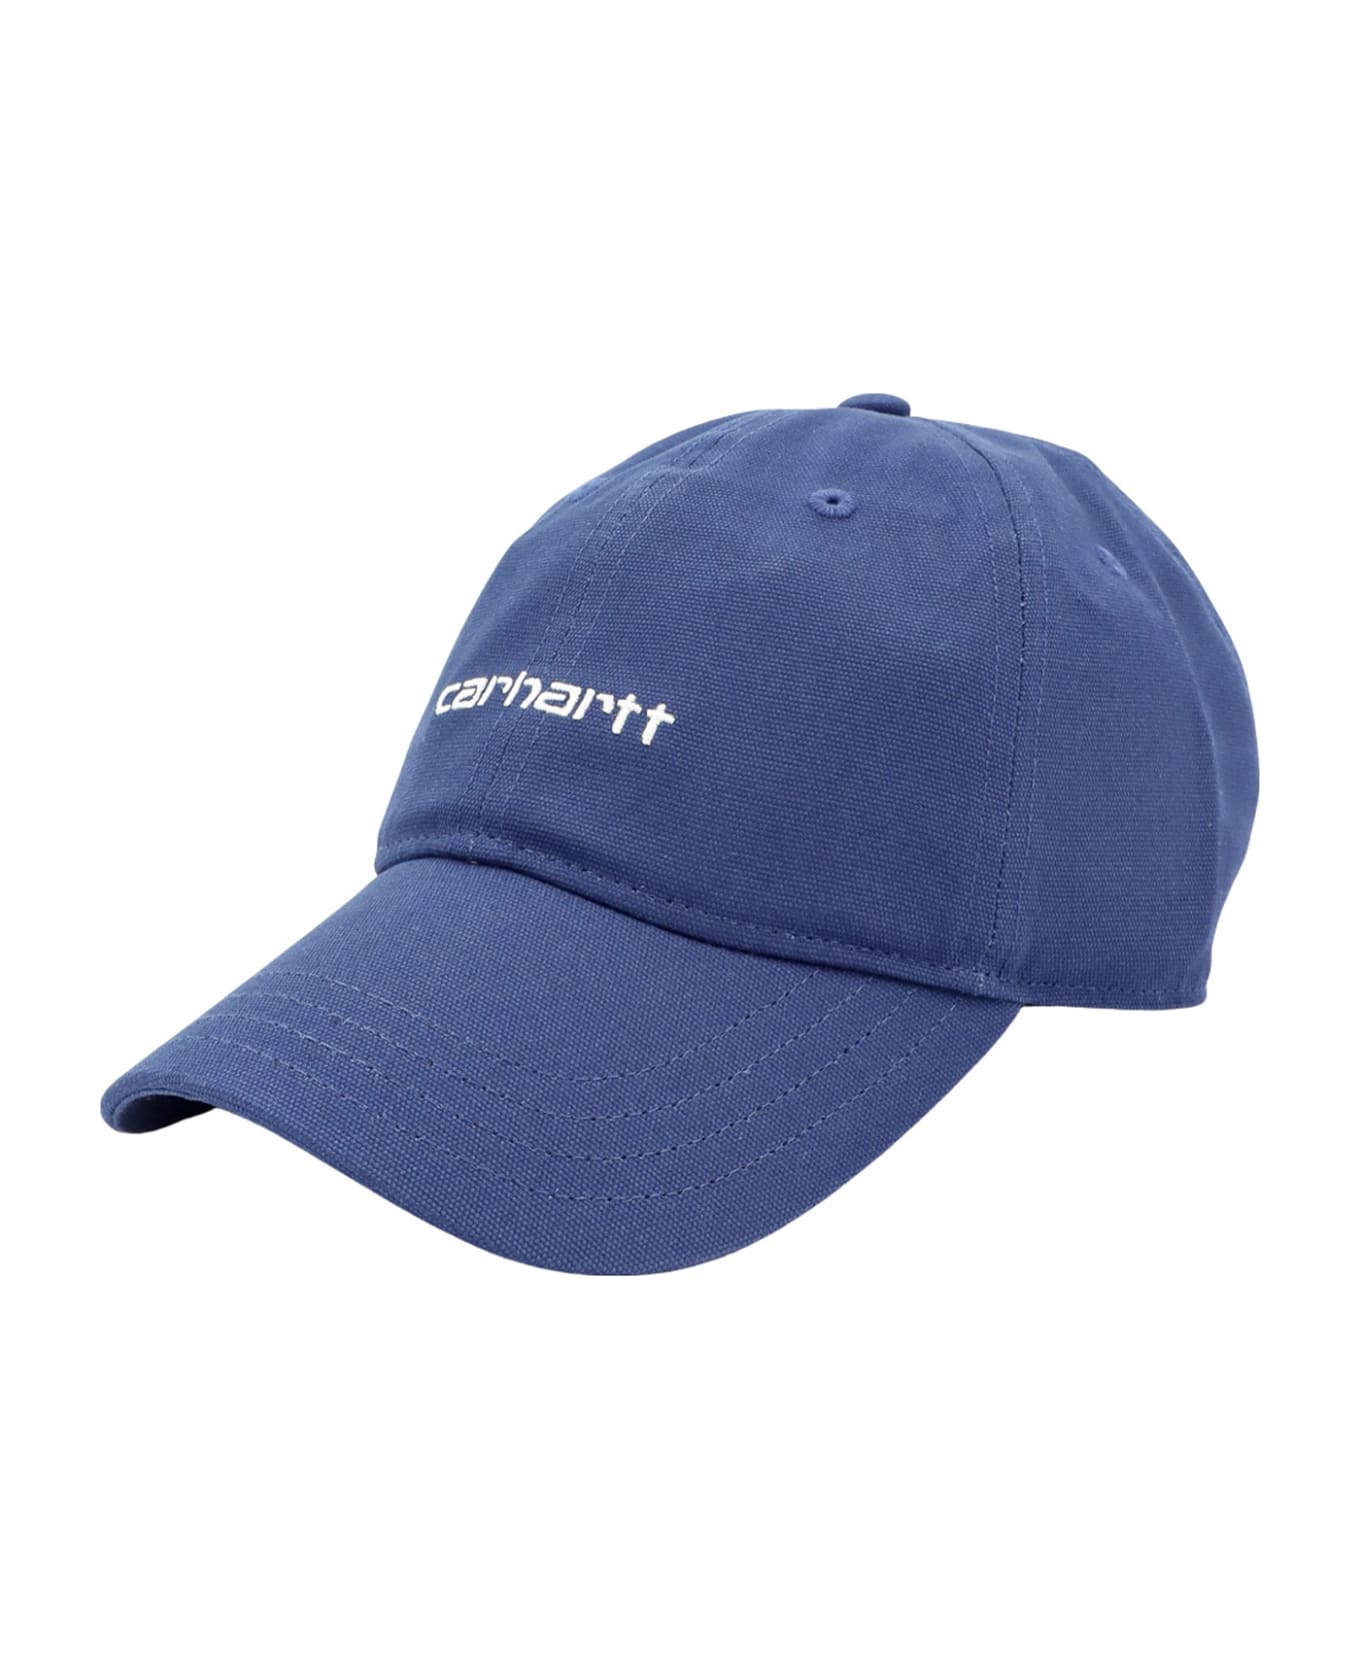 Carhartt Hat - White 帽子